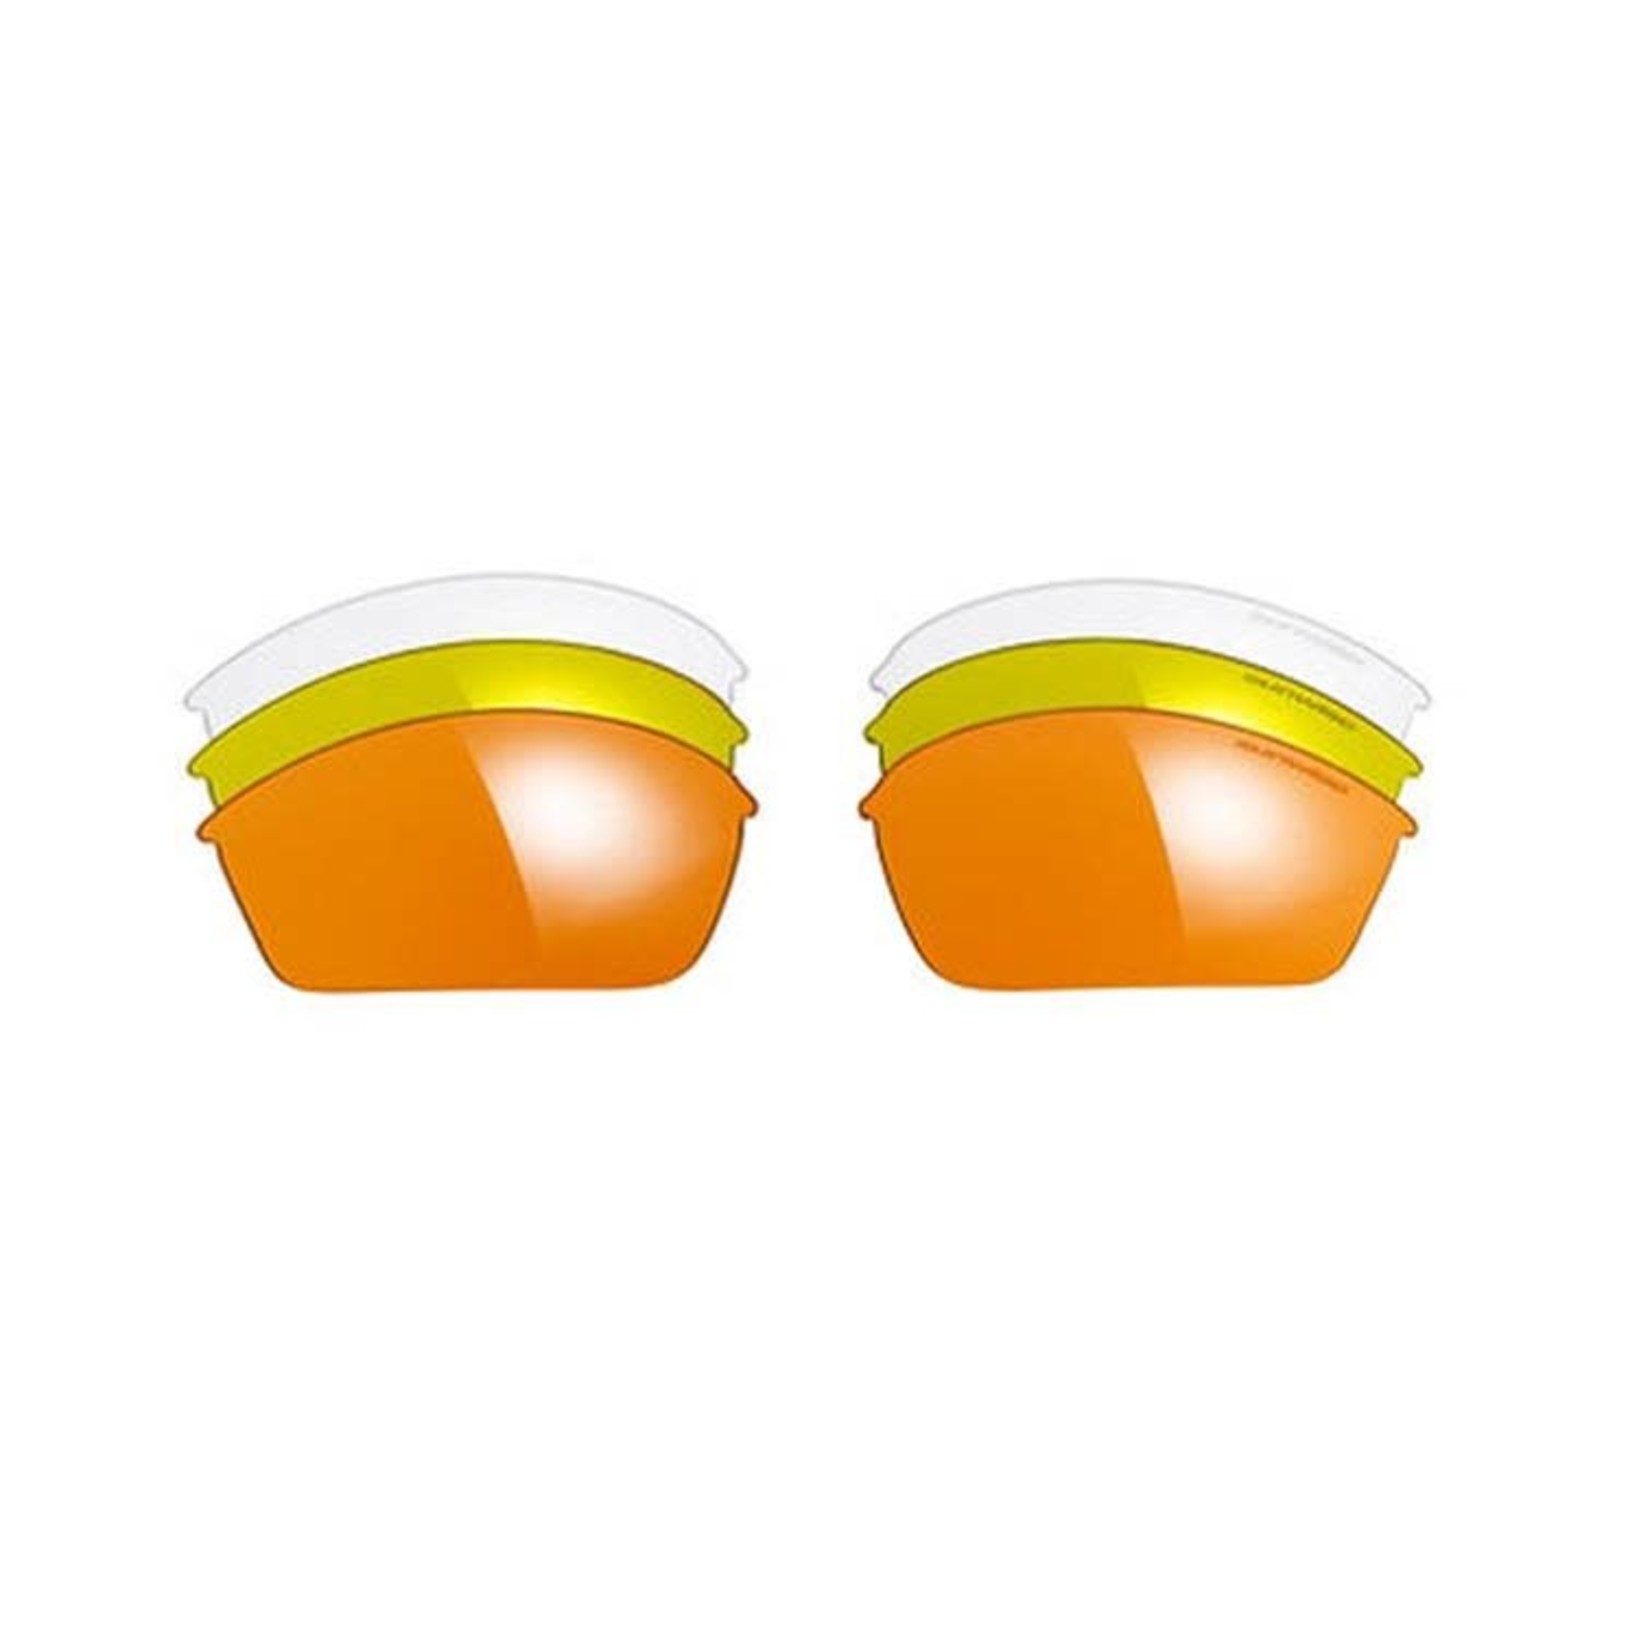 Sunwise Kennington Sunglasses Spare Lenses